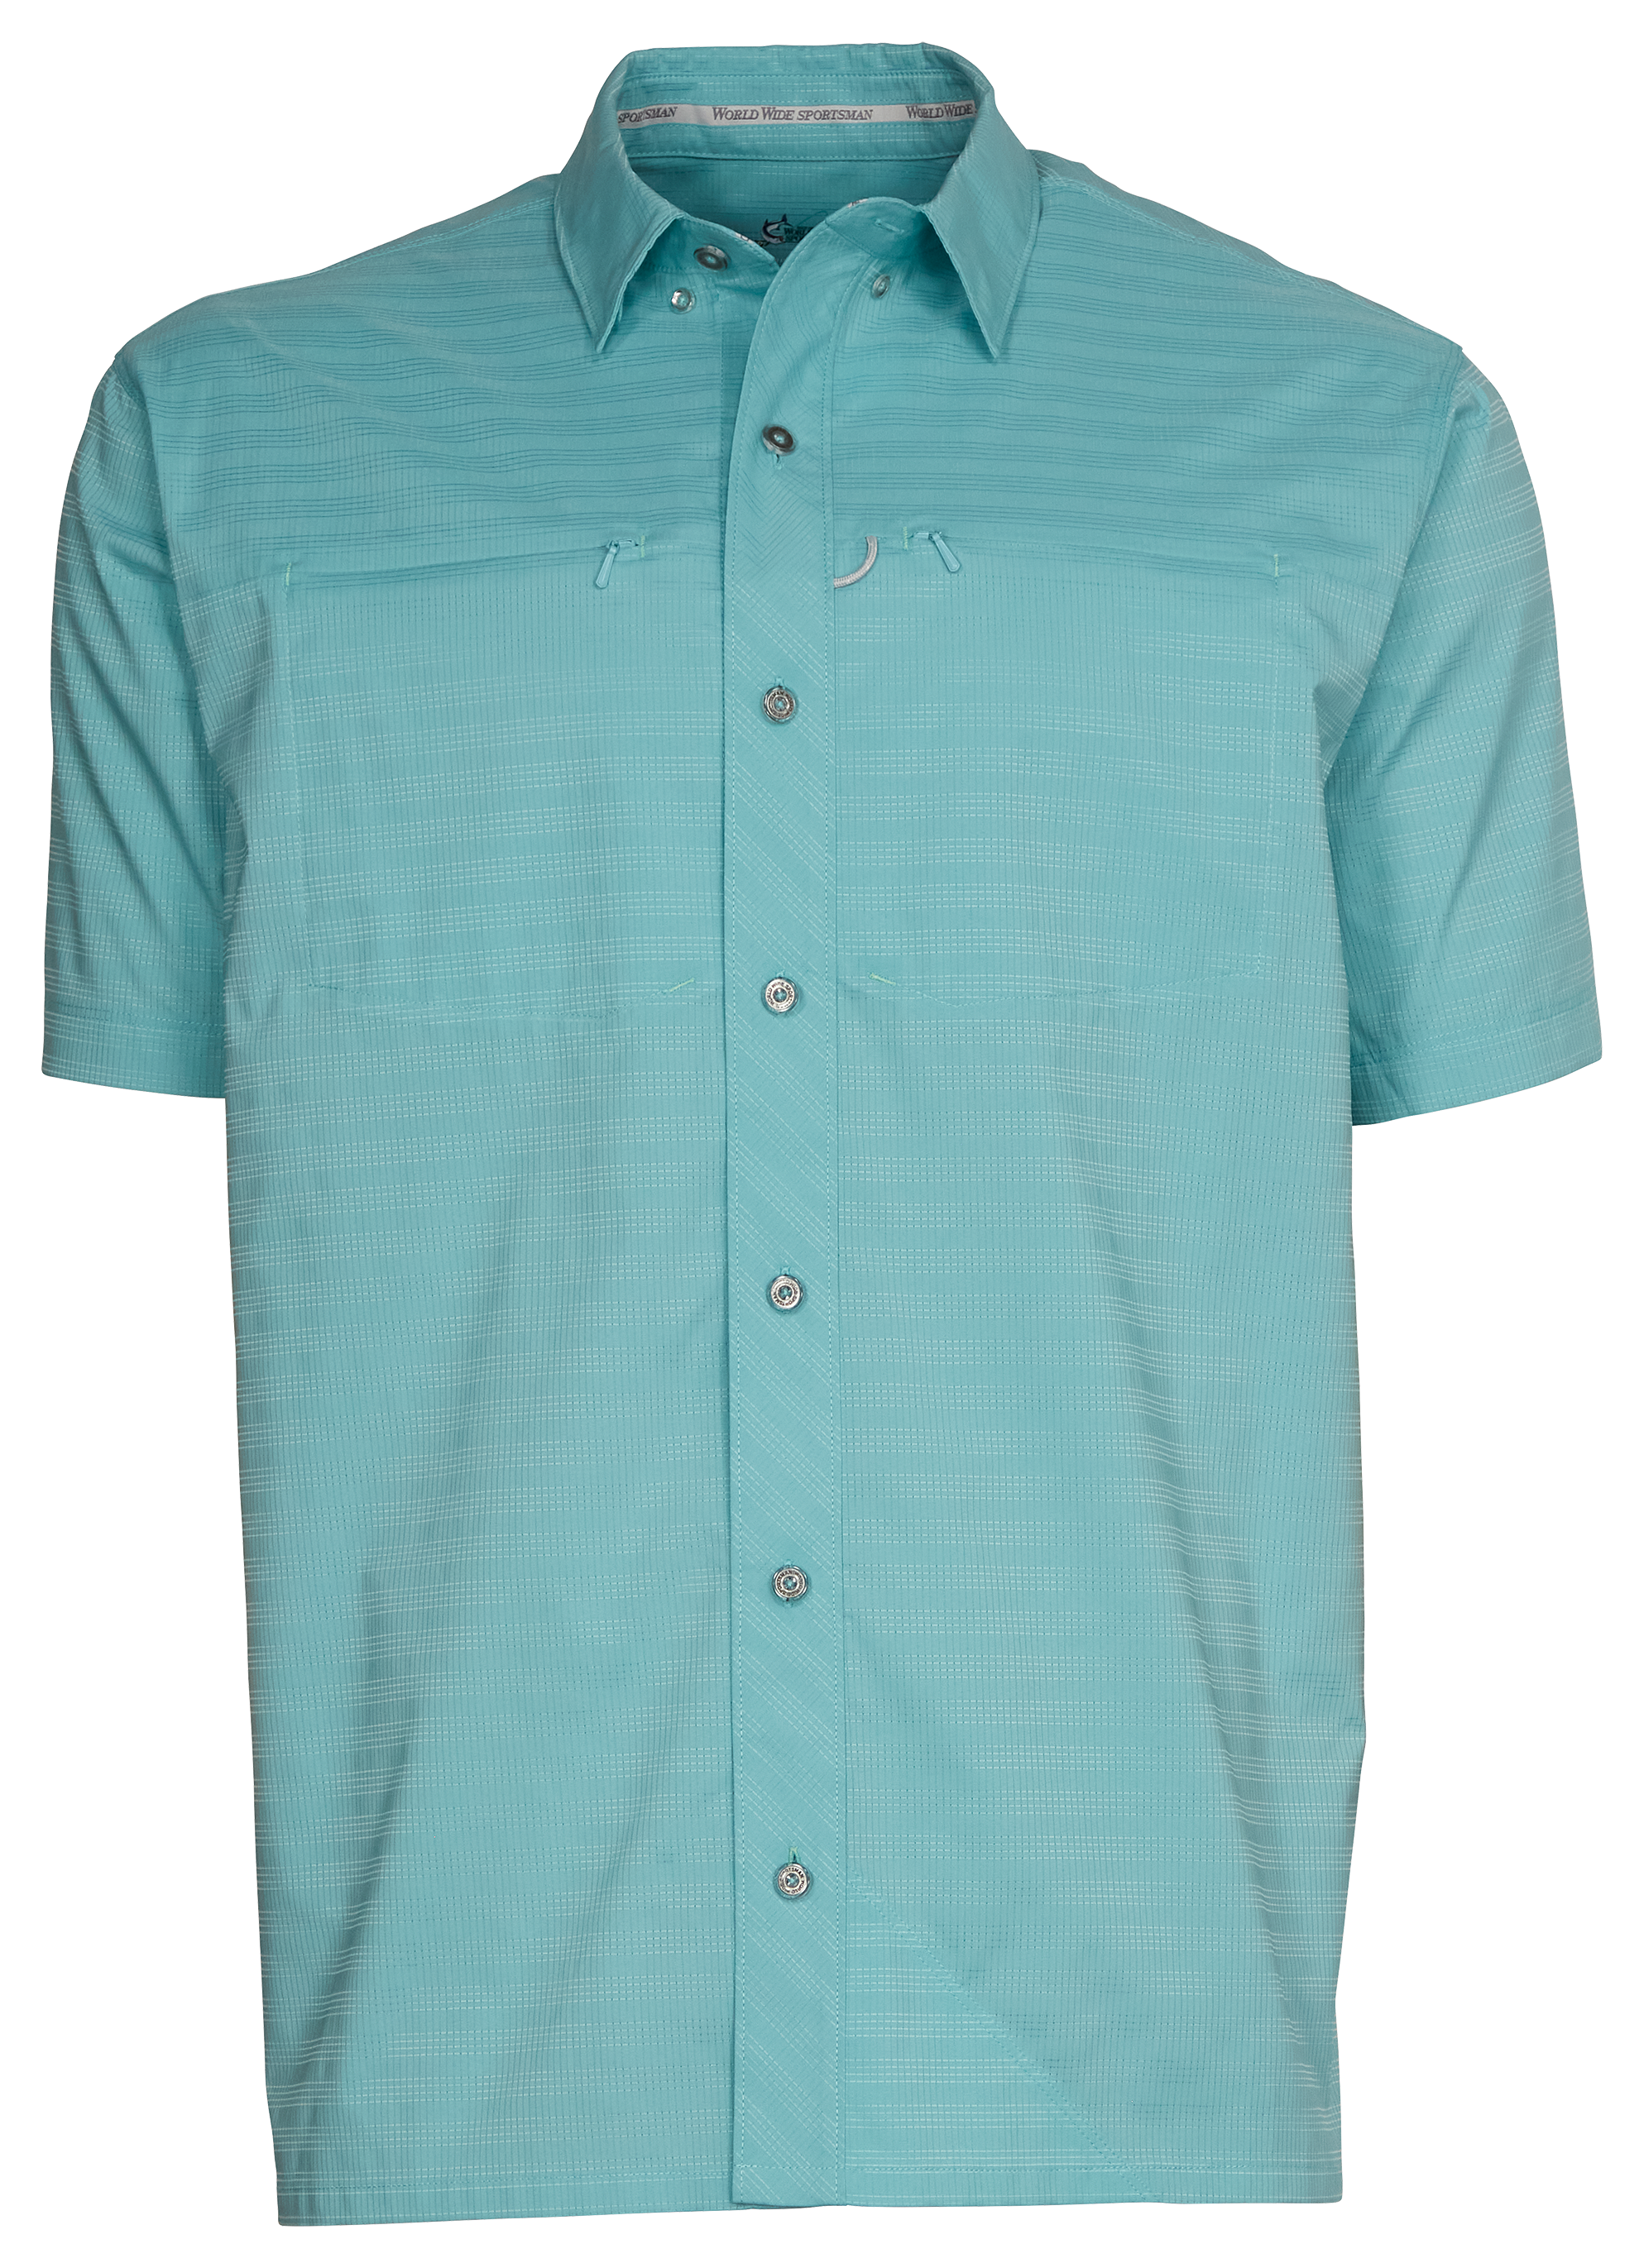 World Wide Sportsman Seacrest 2-Pocket Short-Sleeve Button-Down Shirt for Men - Reef Waters - M